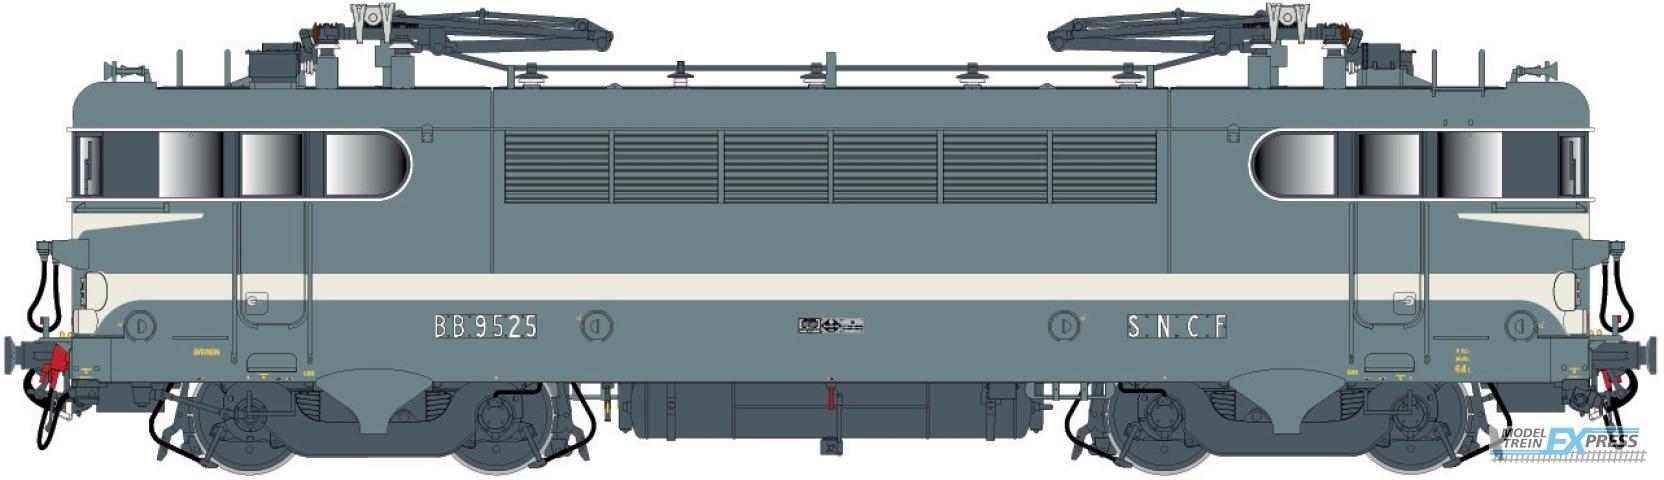 LS Models 10250 BB 9525, Béziers-livrei, brede witte lijn, geschilderde snorren, depot Avignon  /  Ep. IV  /  SNCF  /  HO  /  DC  /  1 P.